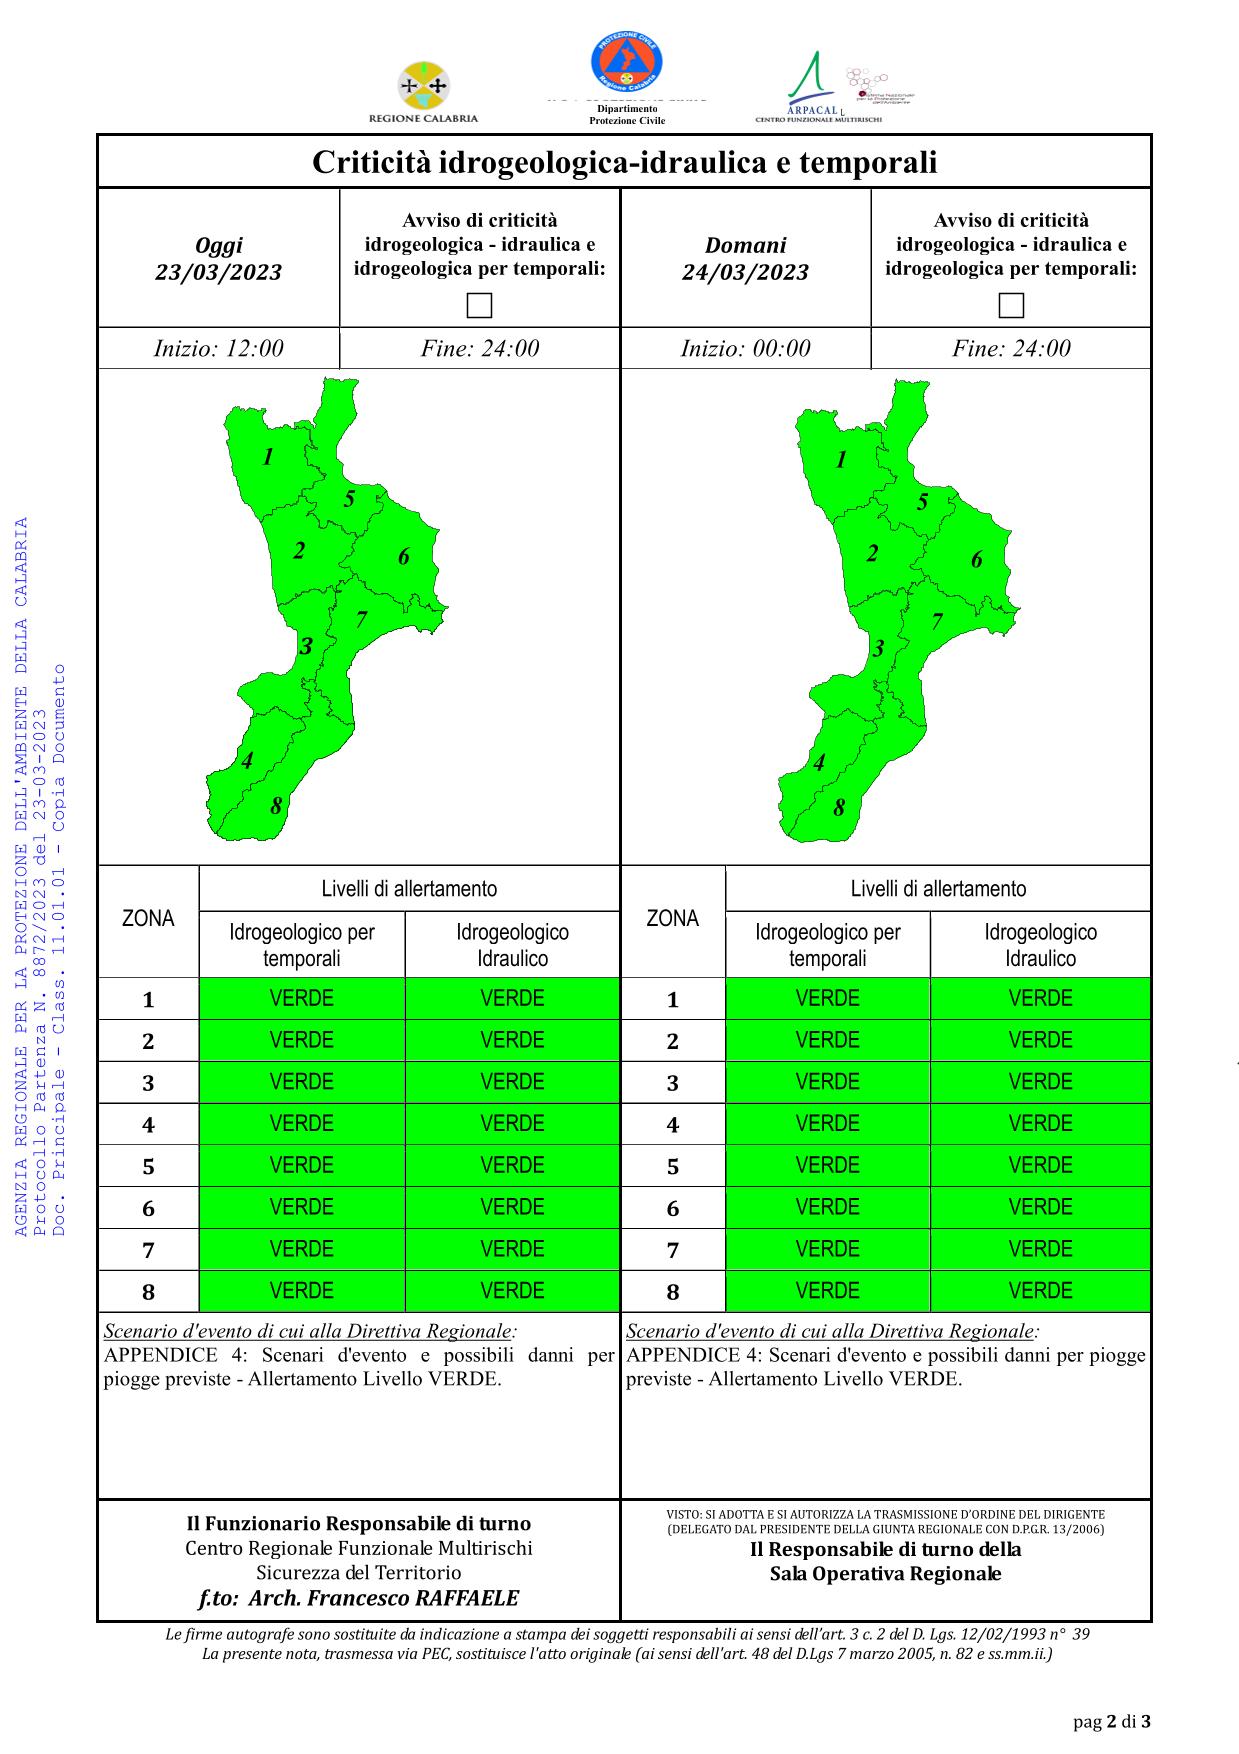 Criticità idrogeologica-idraulica e temporali in Calabria 23-03-2023